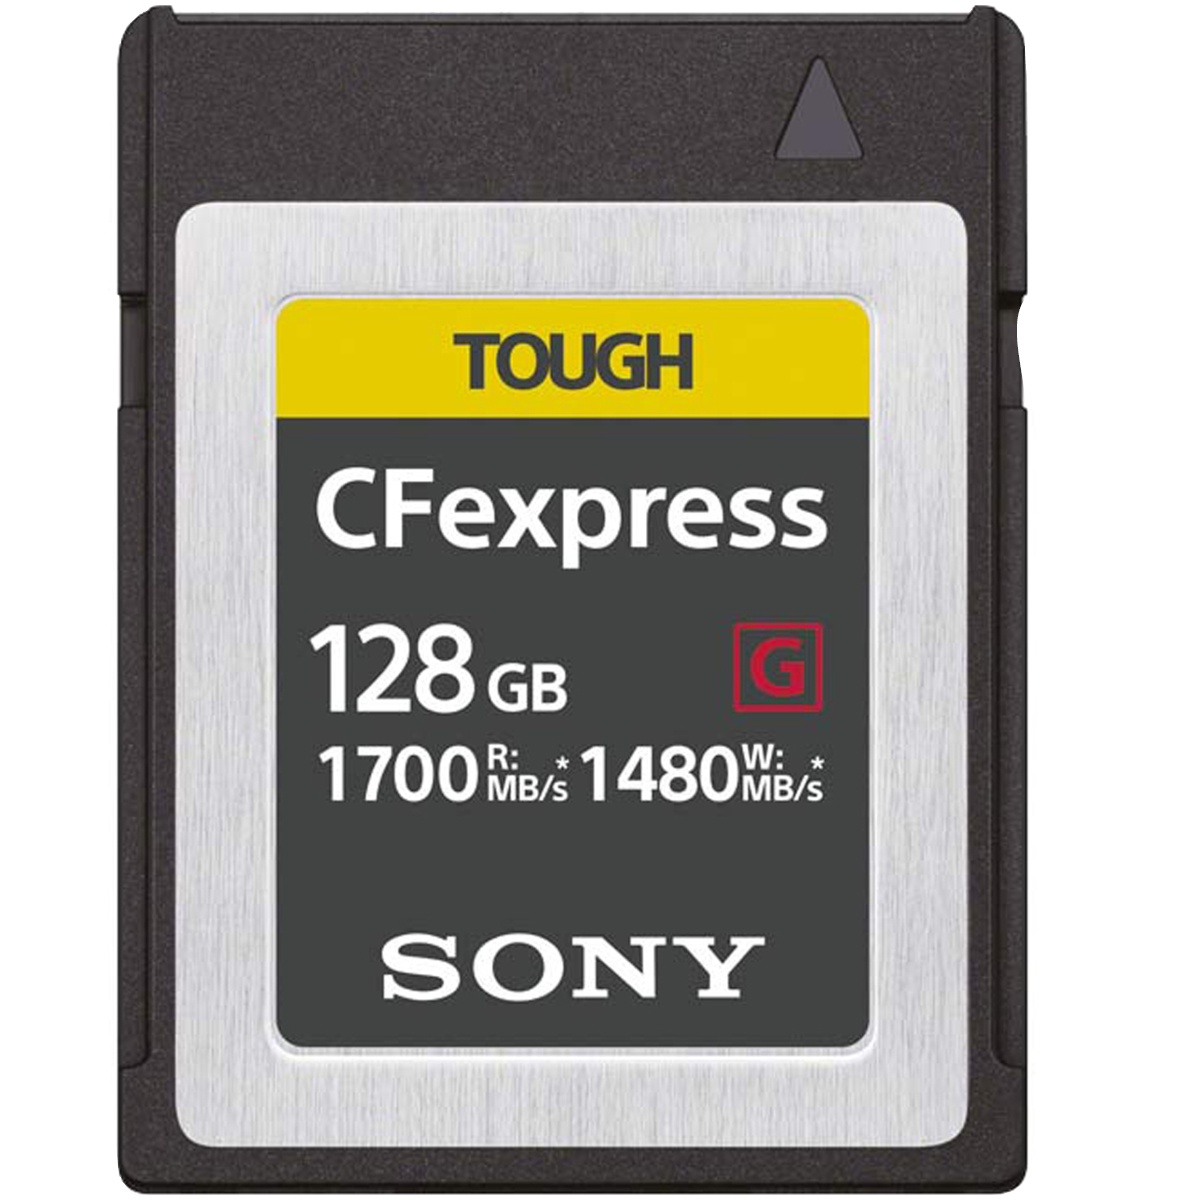 Sony 128 GB CF Express Tough G